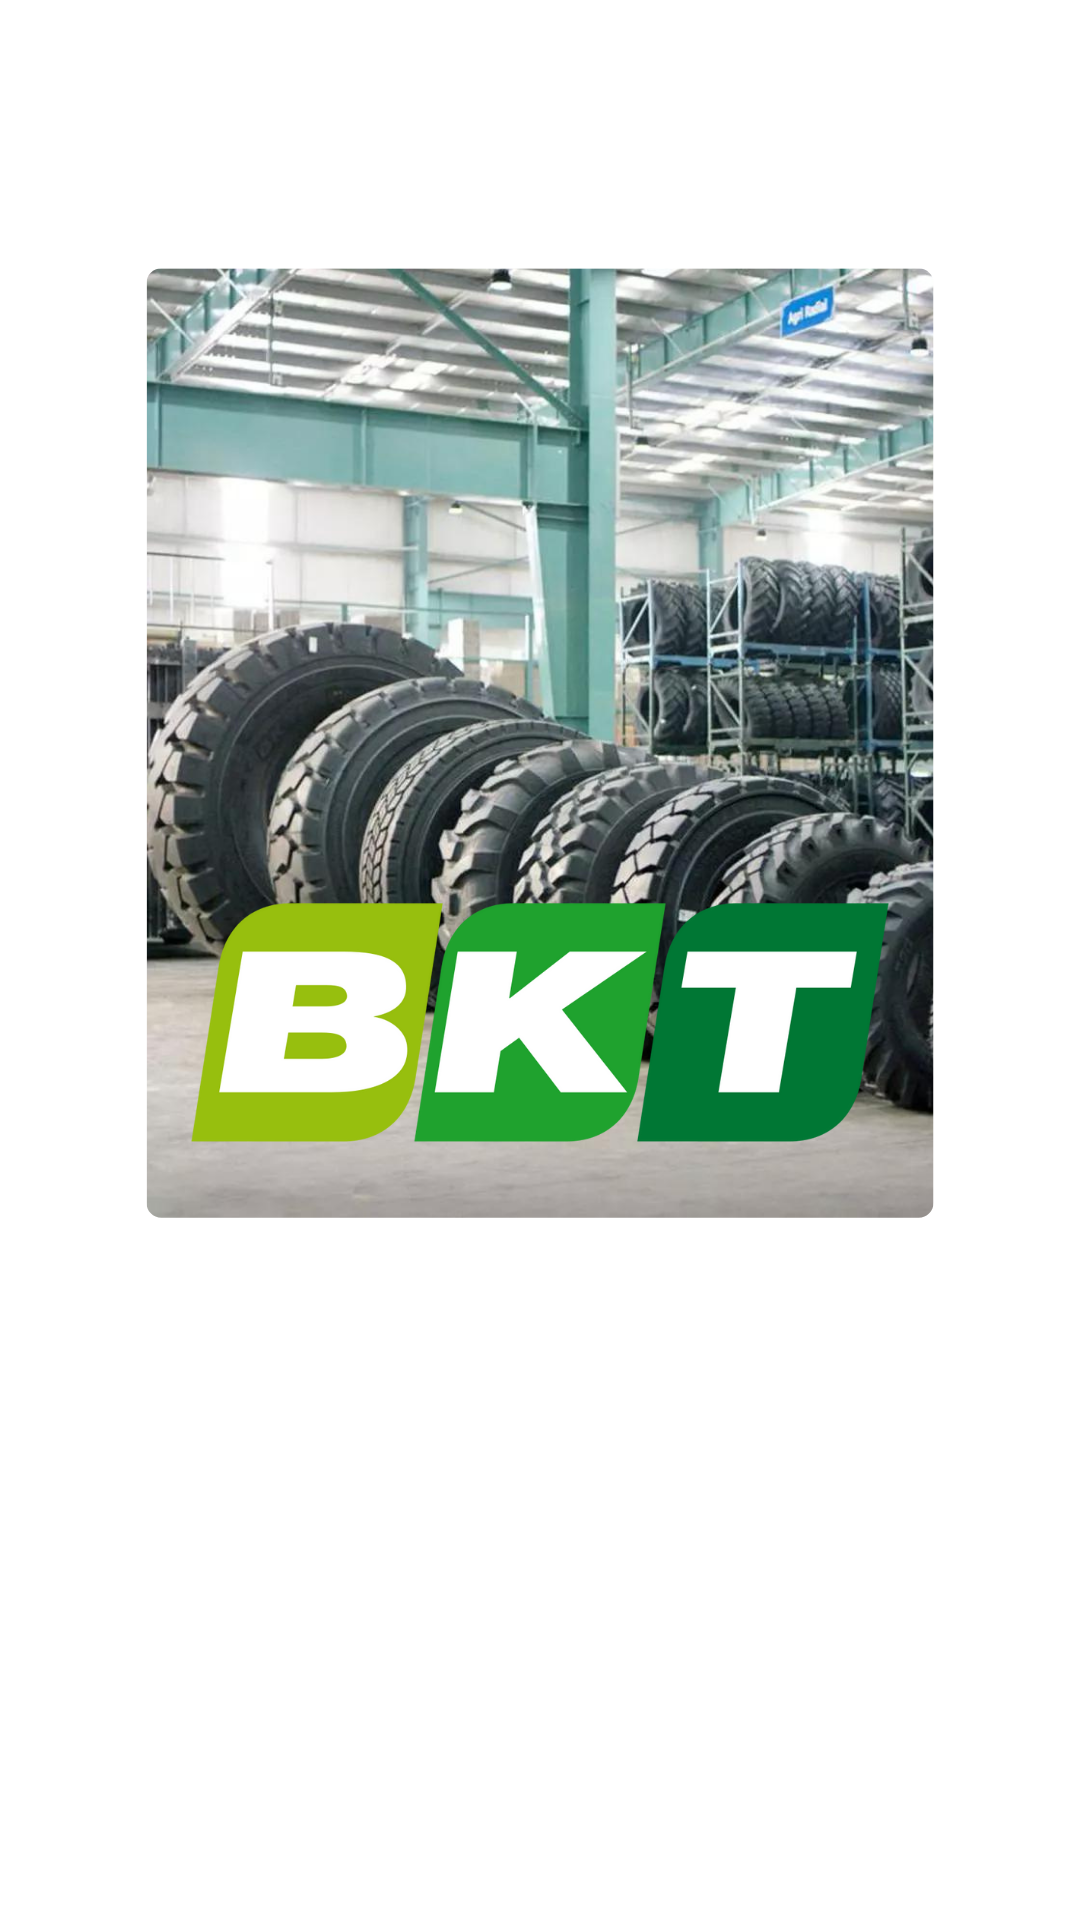 BKT Tires decal – North 49 Decals